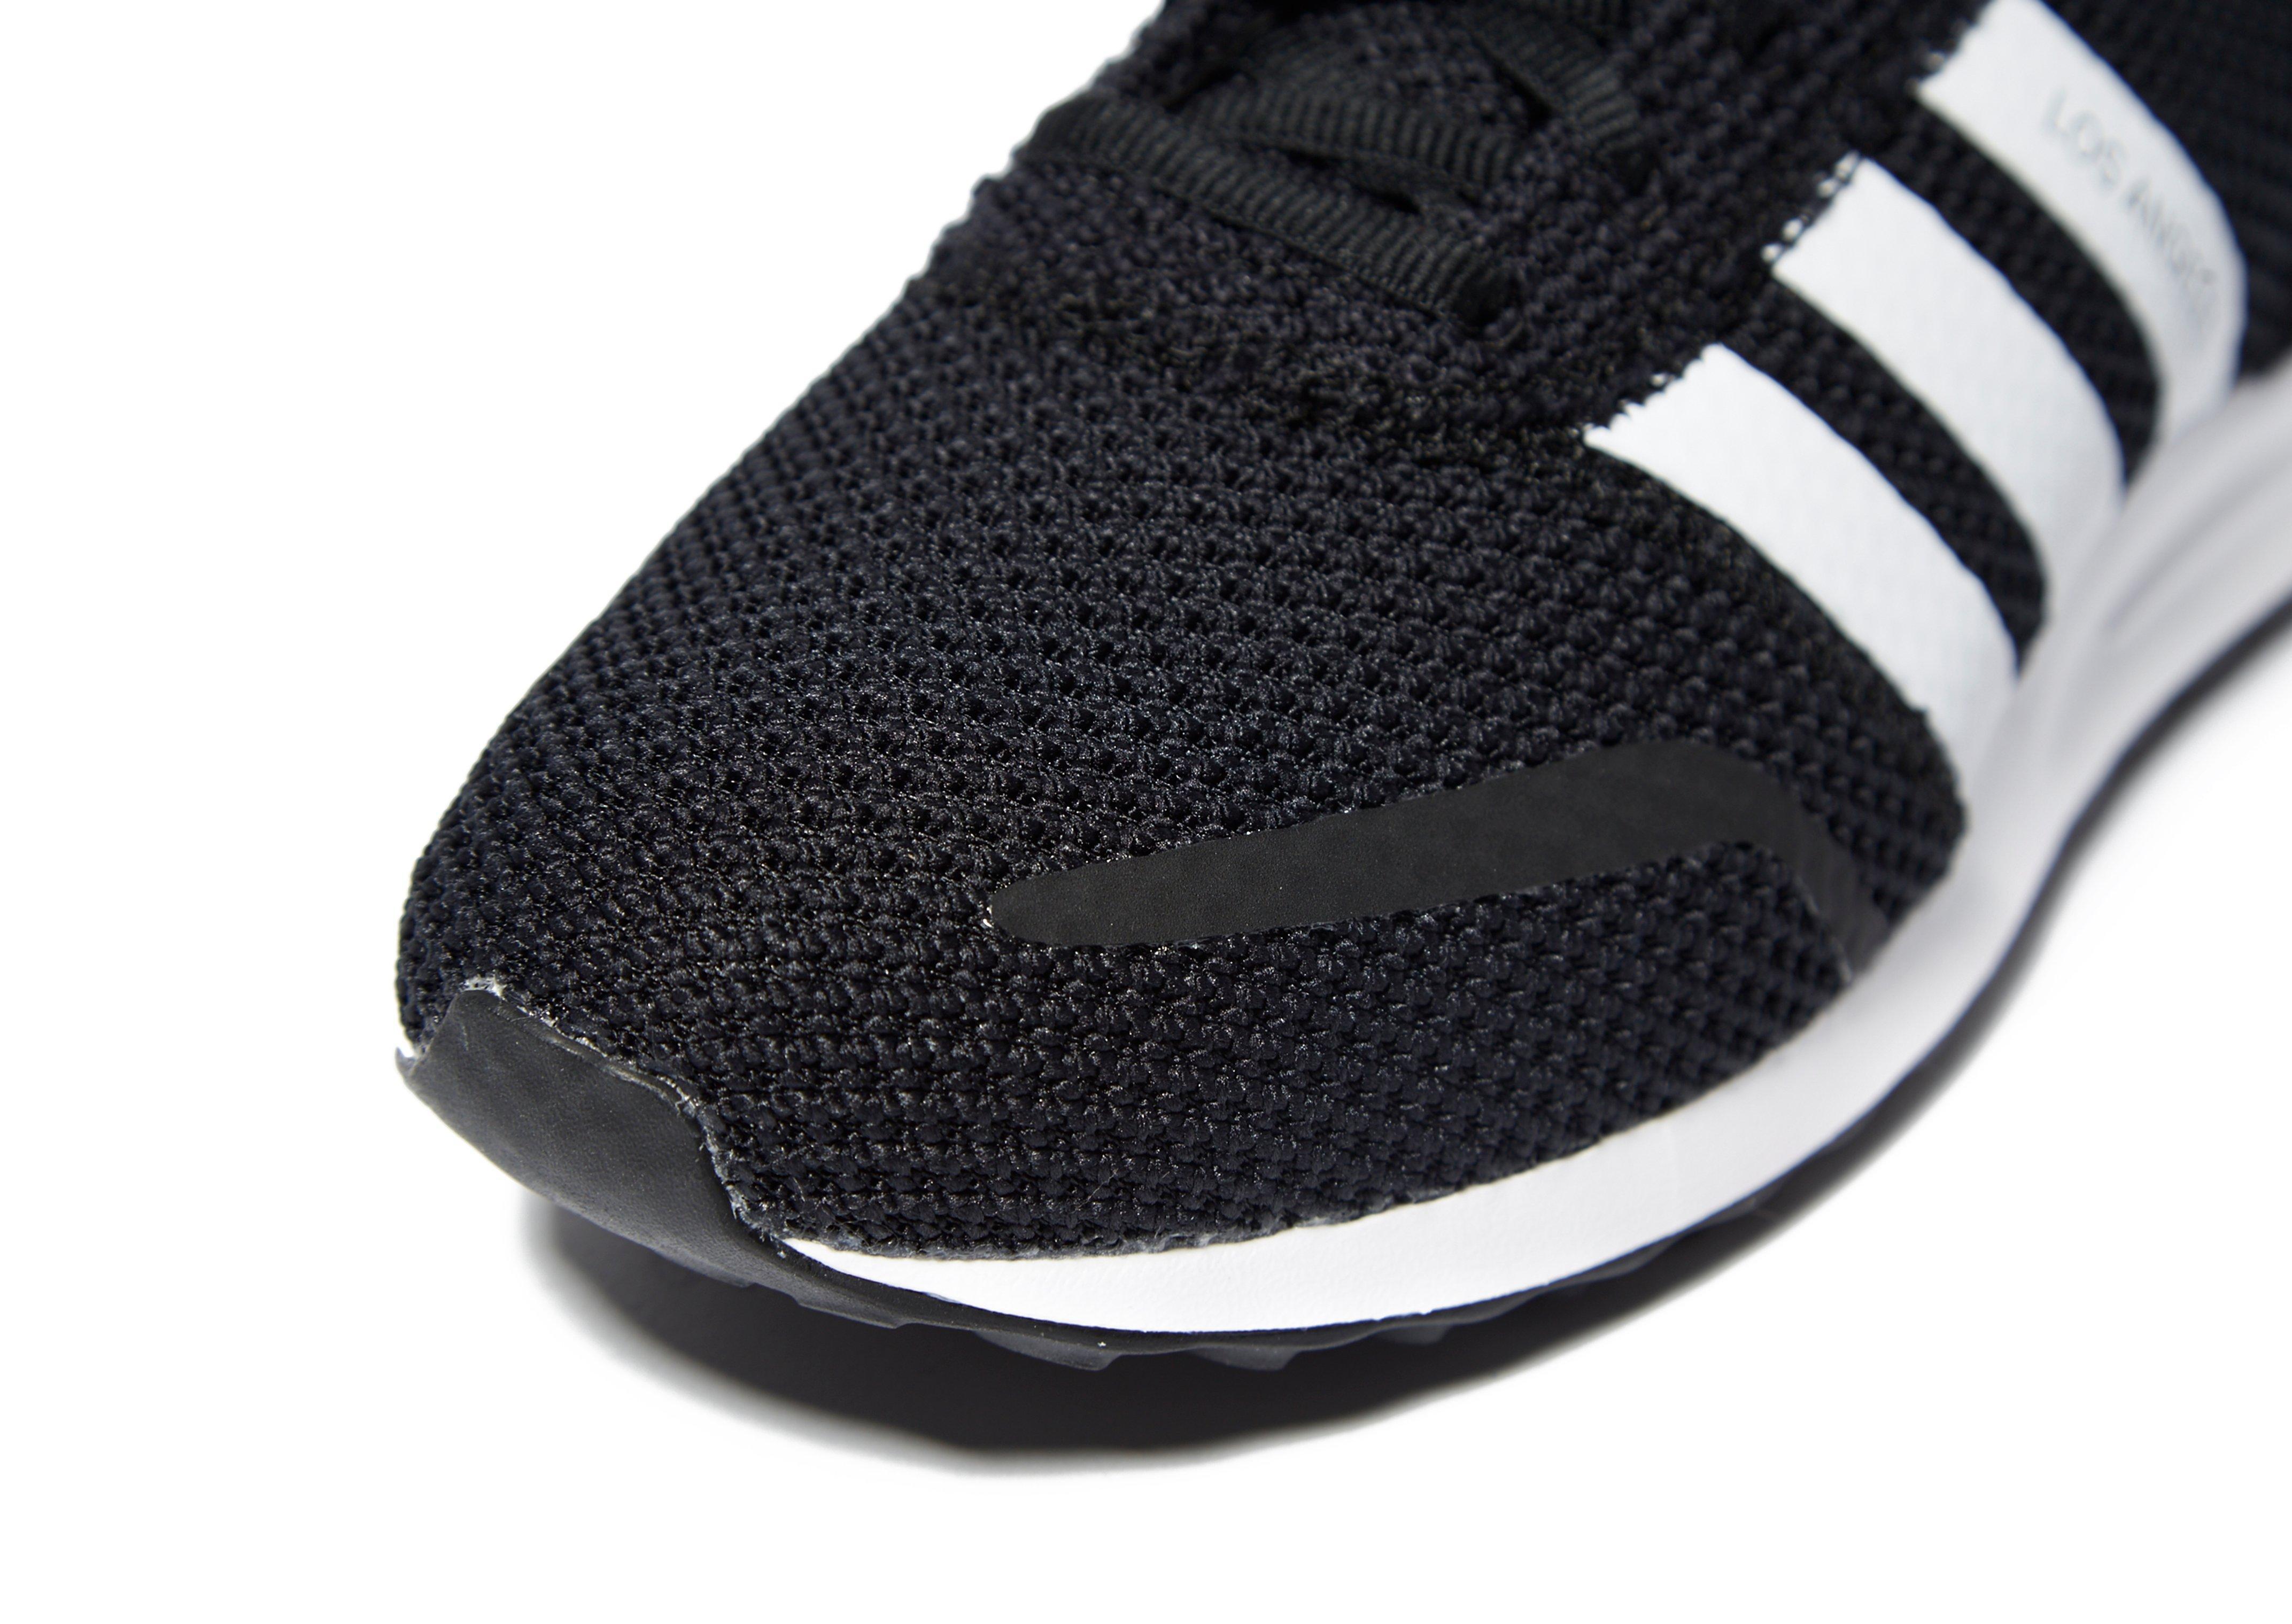 adidas Originals Rubber Los Angeles Ck in Black/White (Black) for Men - Lyst